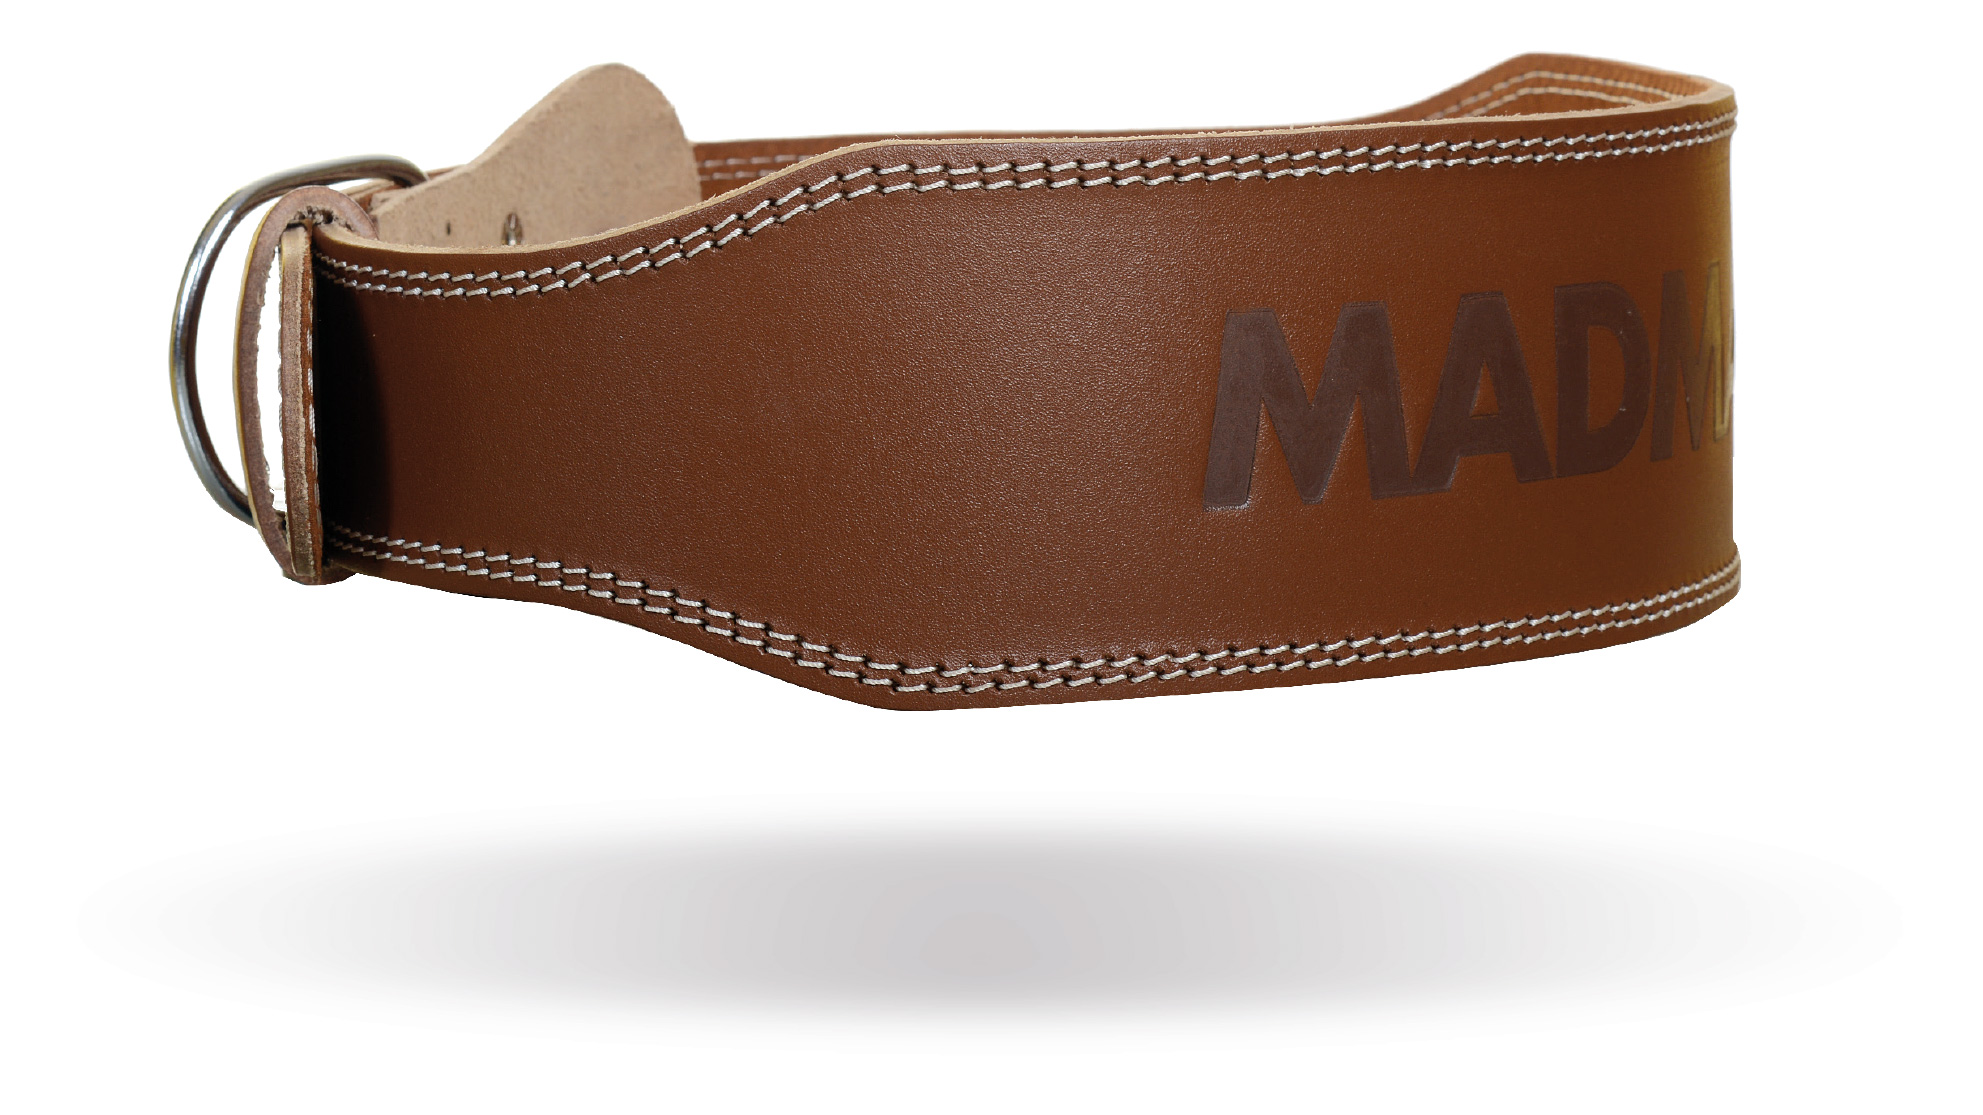 MAD MAX MFB-246 full leather chocolate brown belt